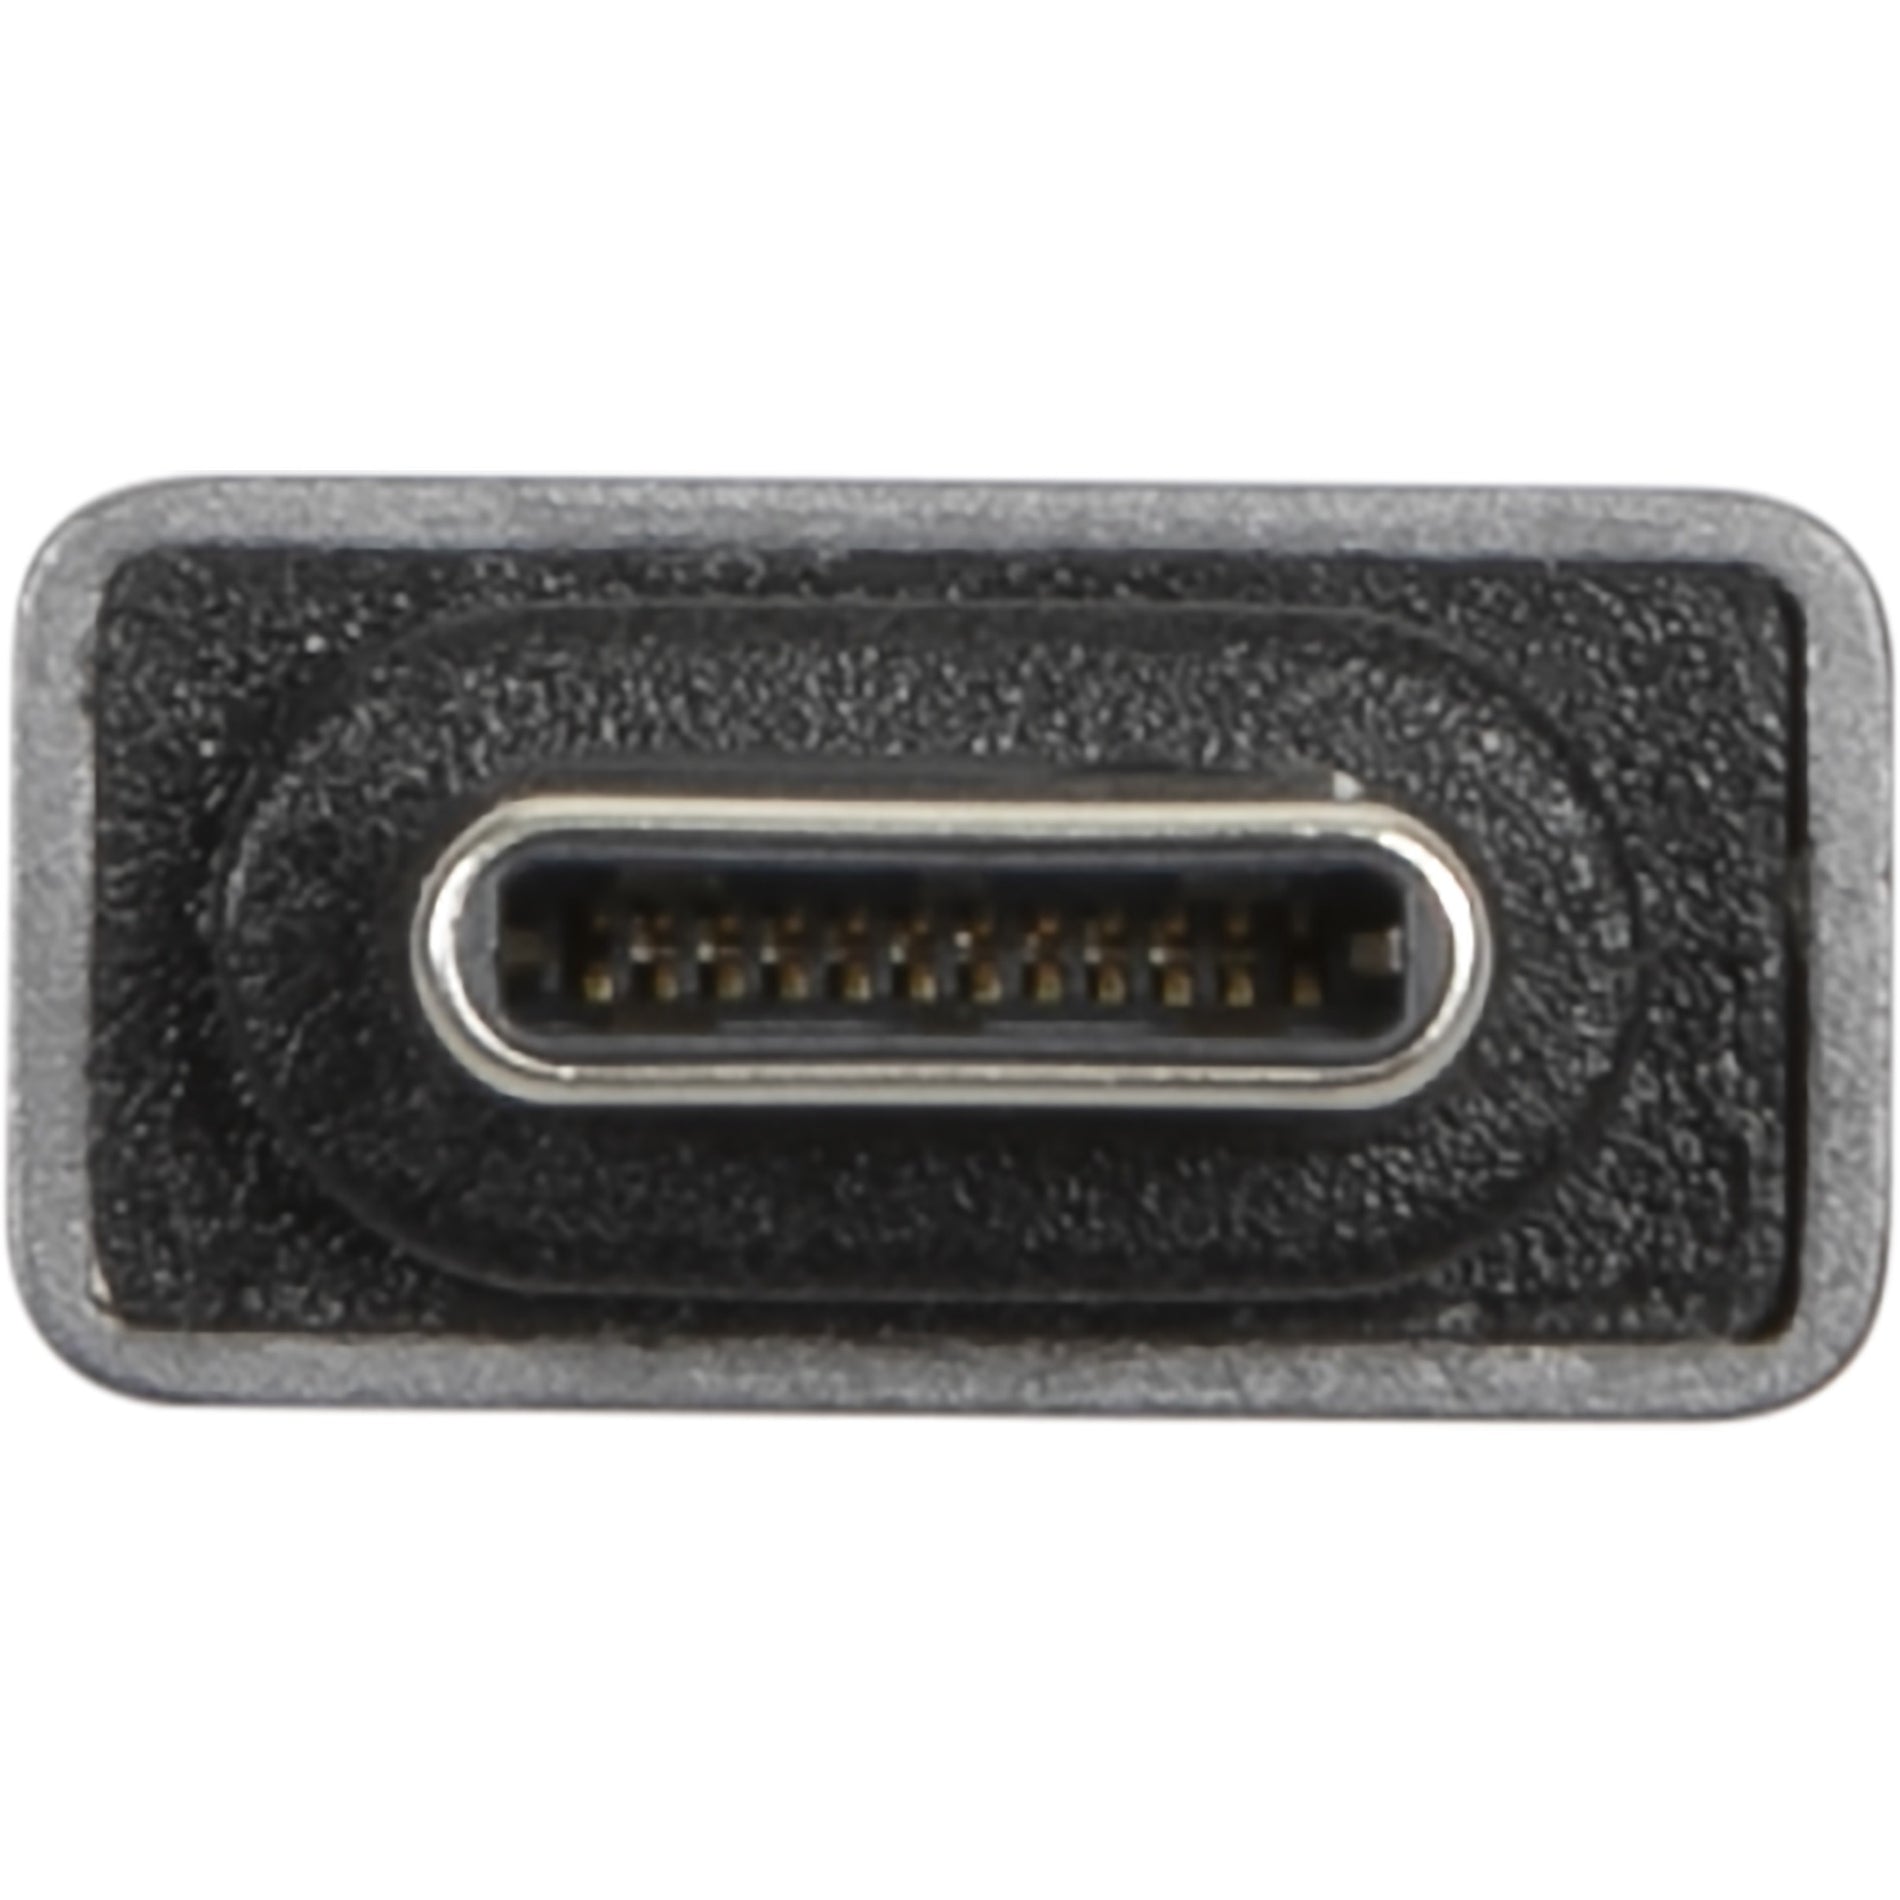 Targus ACA979GL USB/USB-C Data Transfer Adapter - Gray, 2 Pack